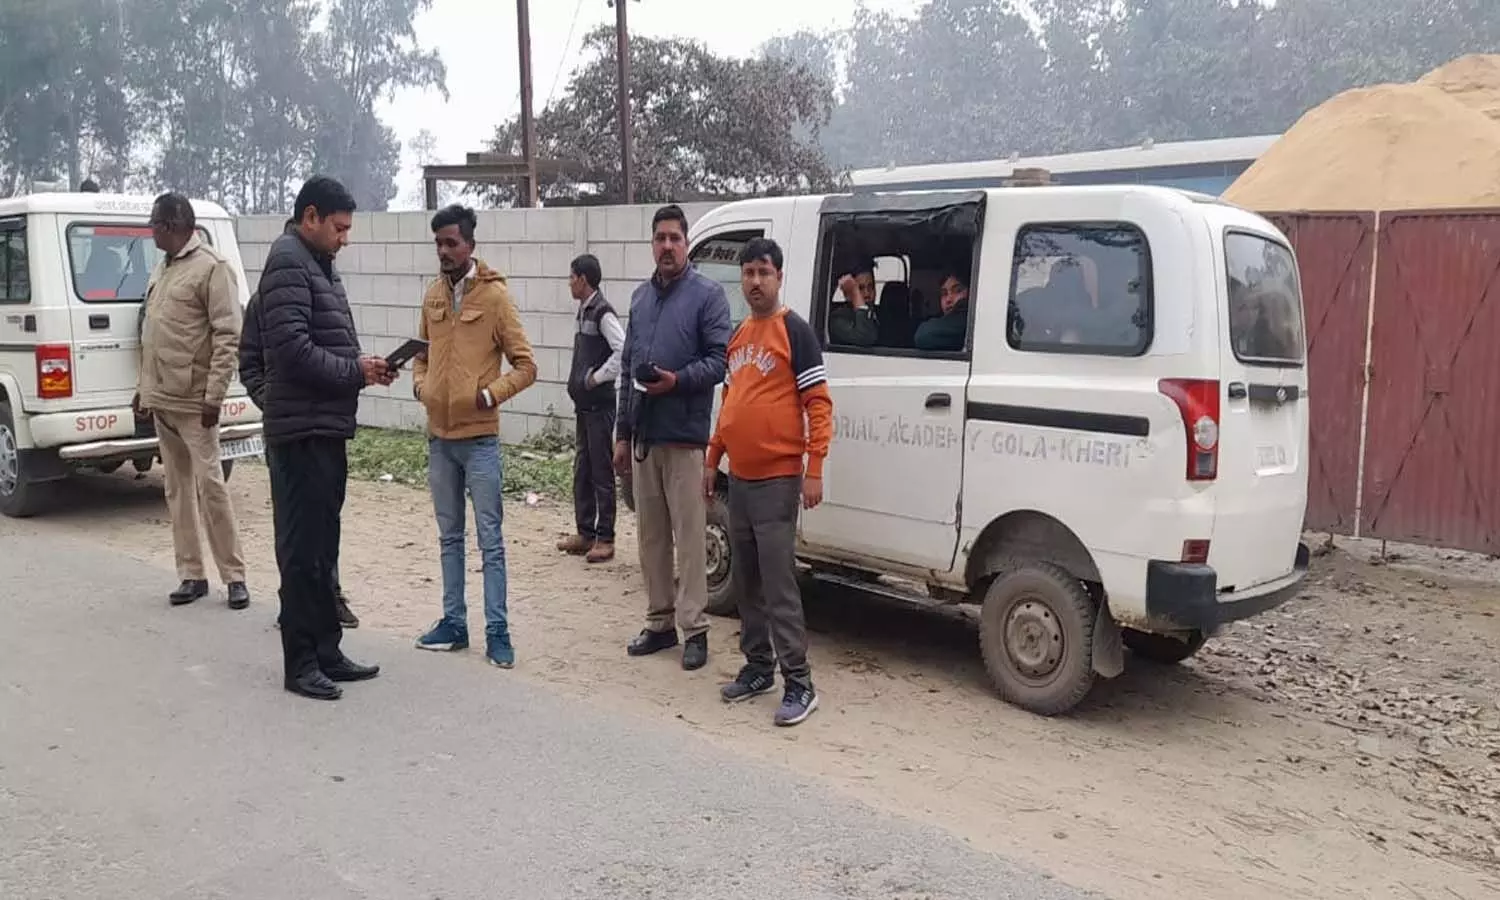 ARTO said in Lakhimpur Kheri follow traffic rules avoid both fine and action